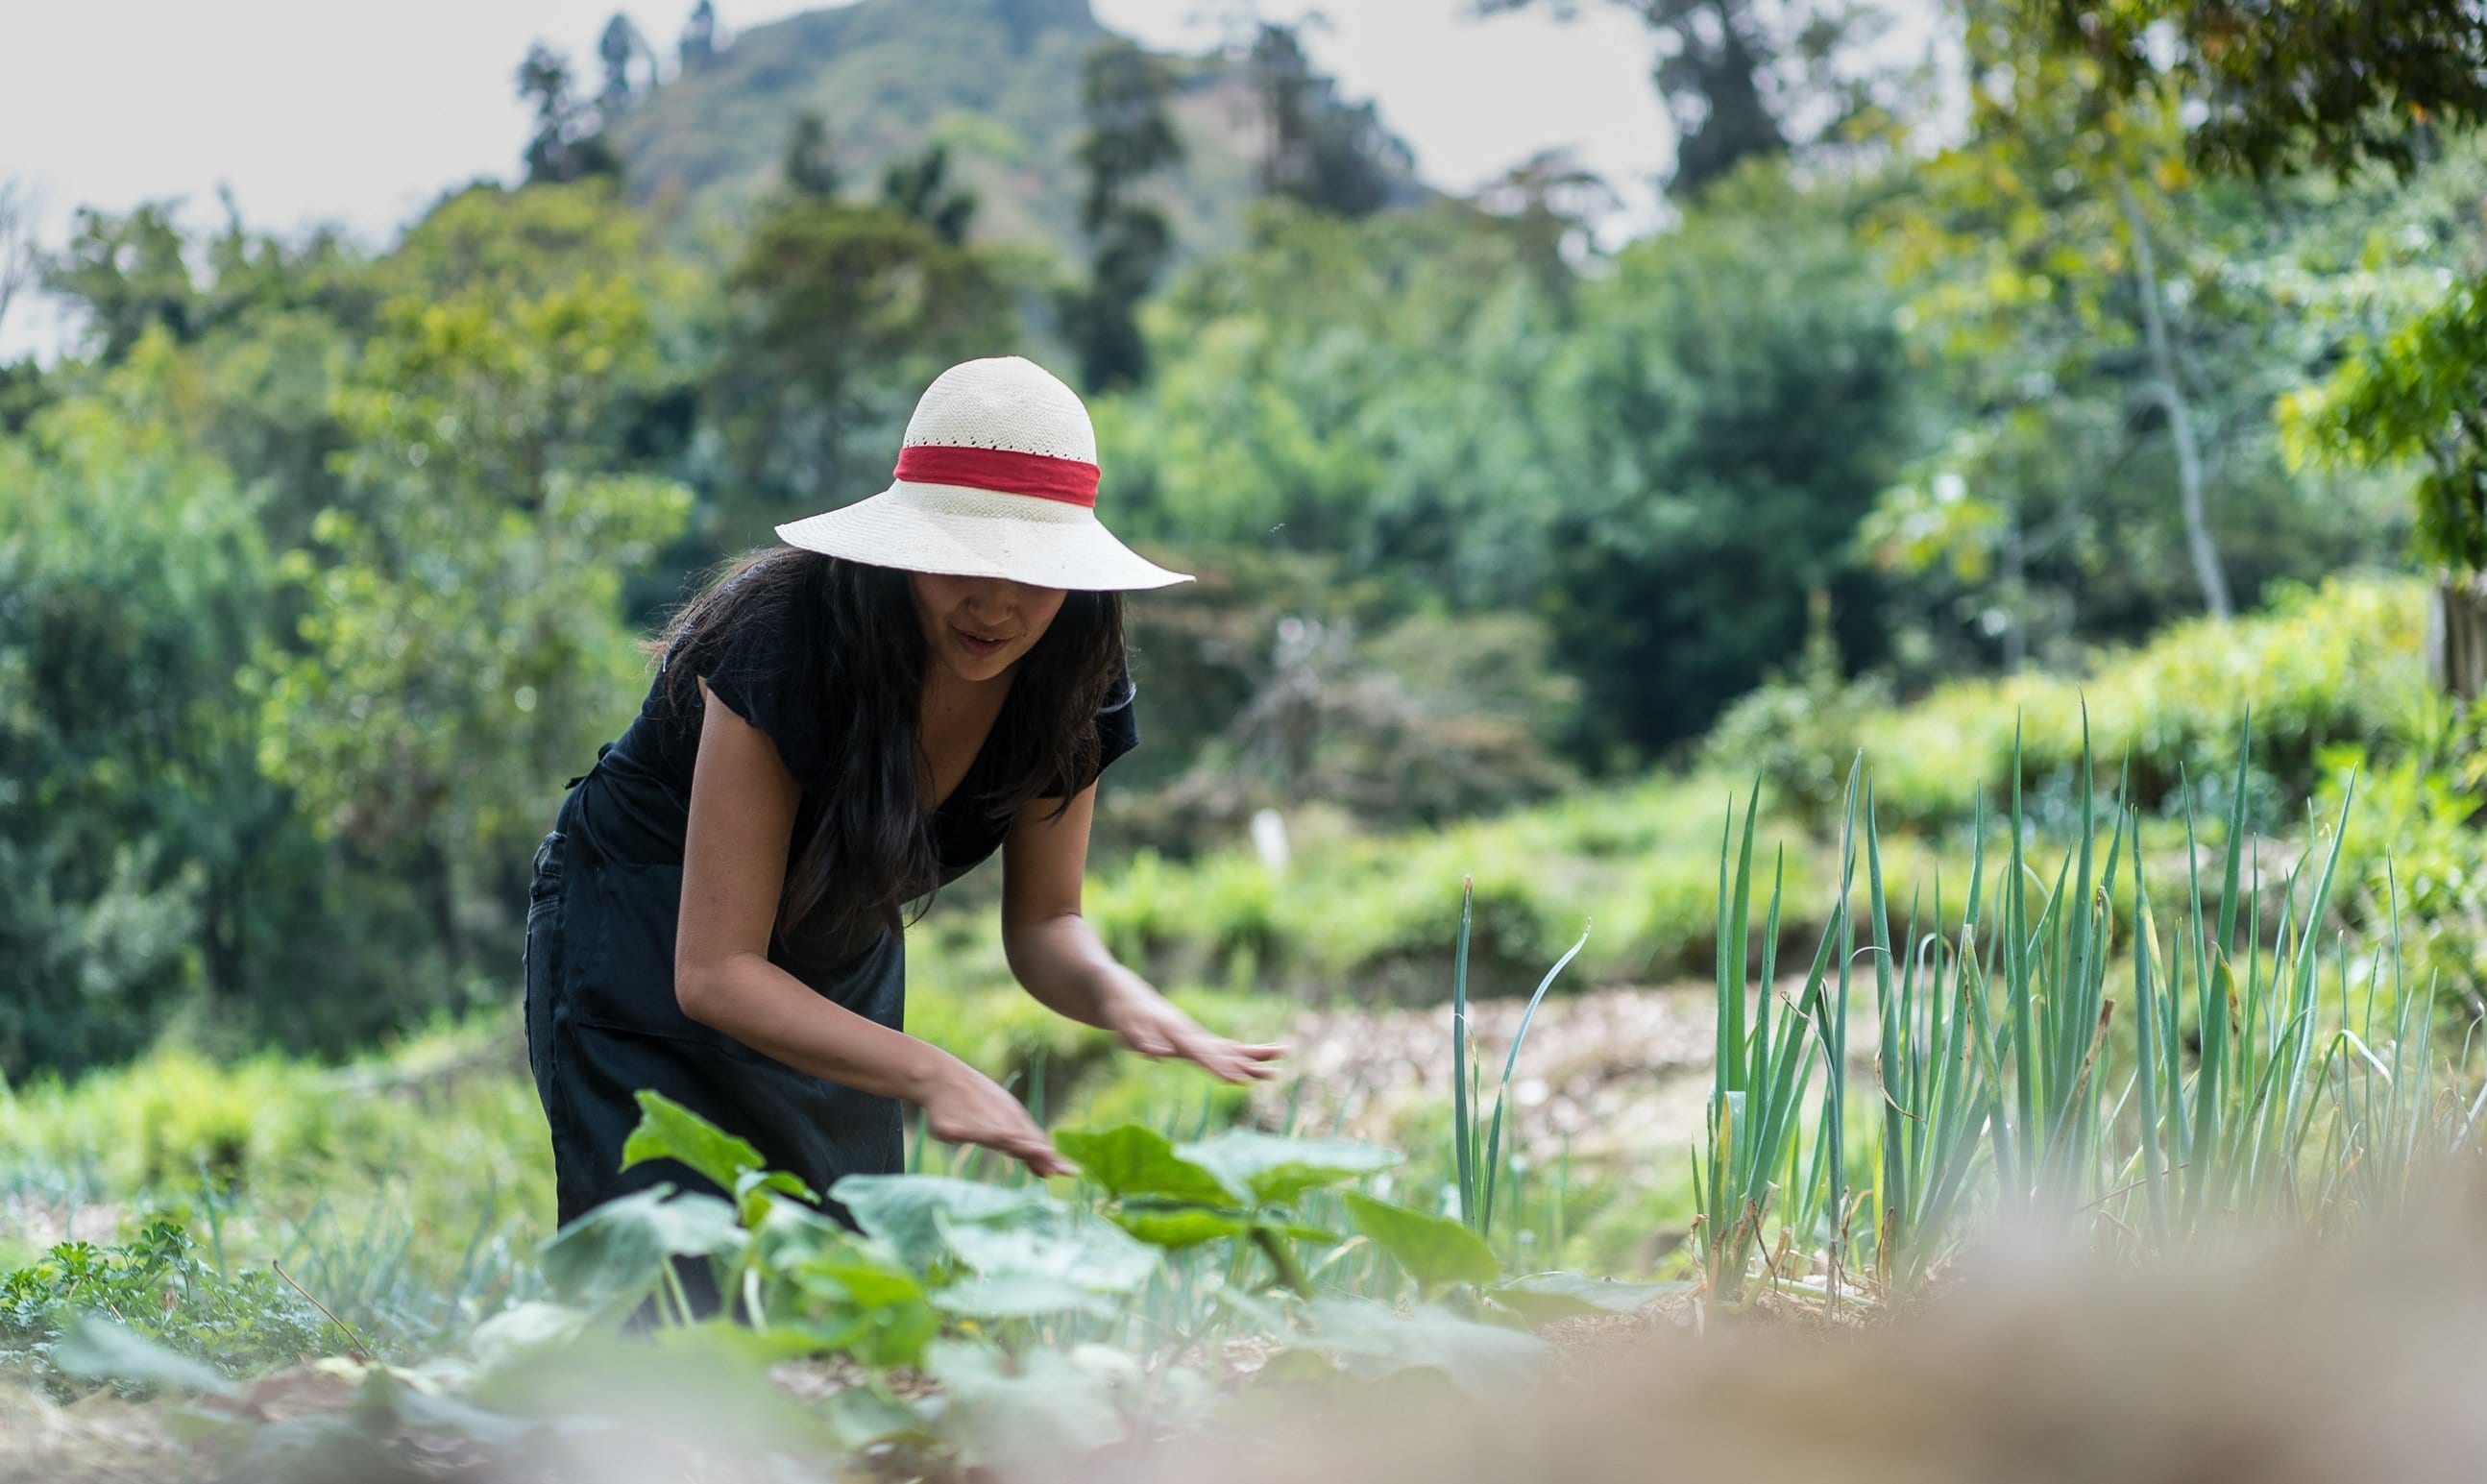 Life in Colombia - deditos verdes project - farming in colombia